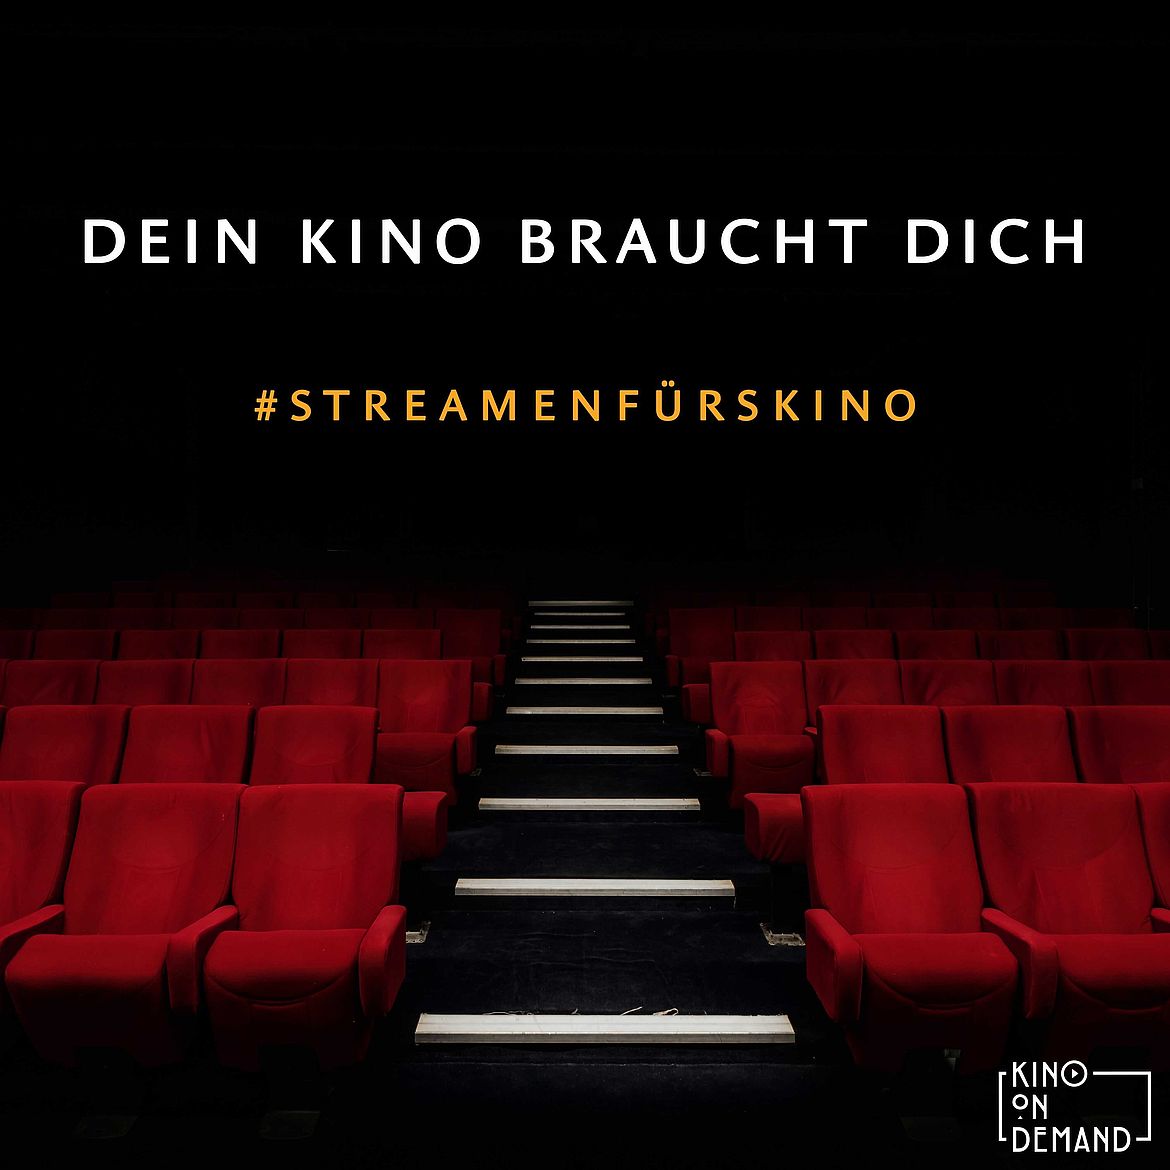 Kino binokel mannheim THE 10